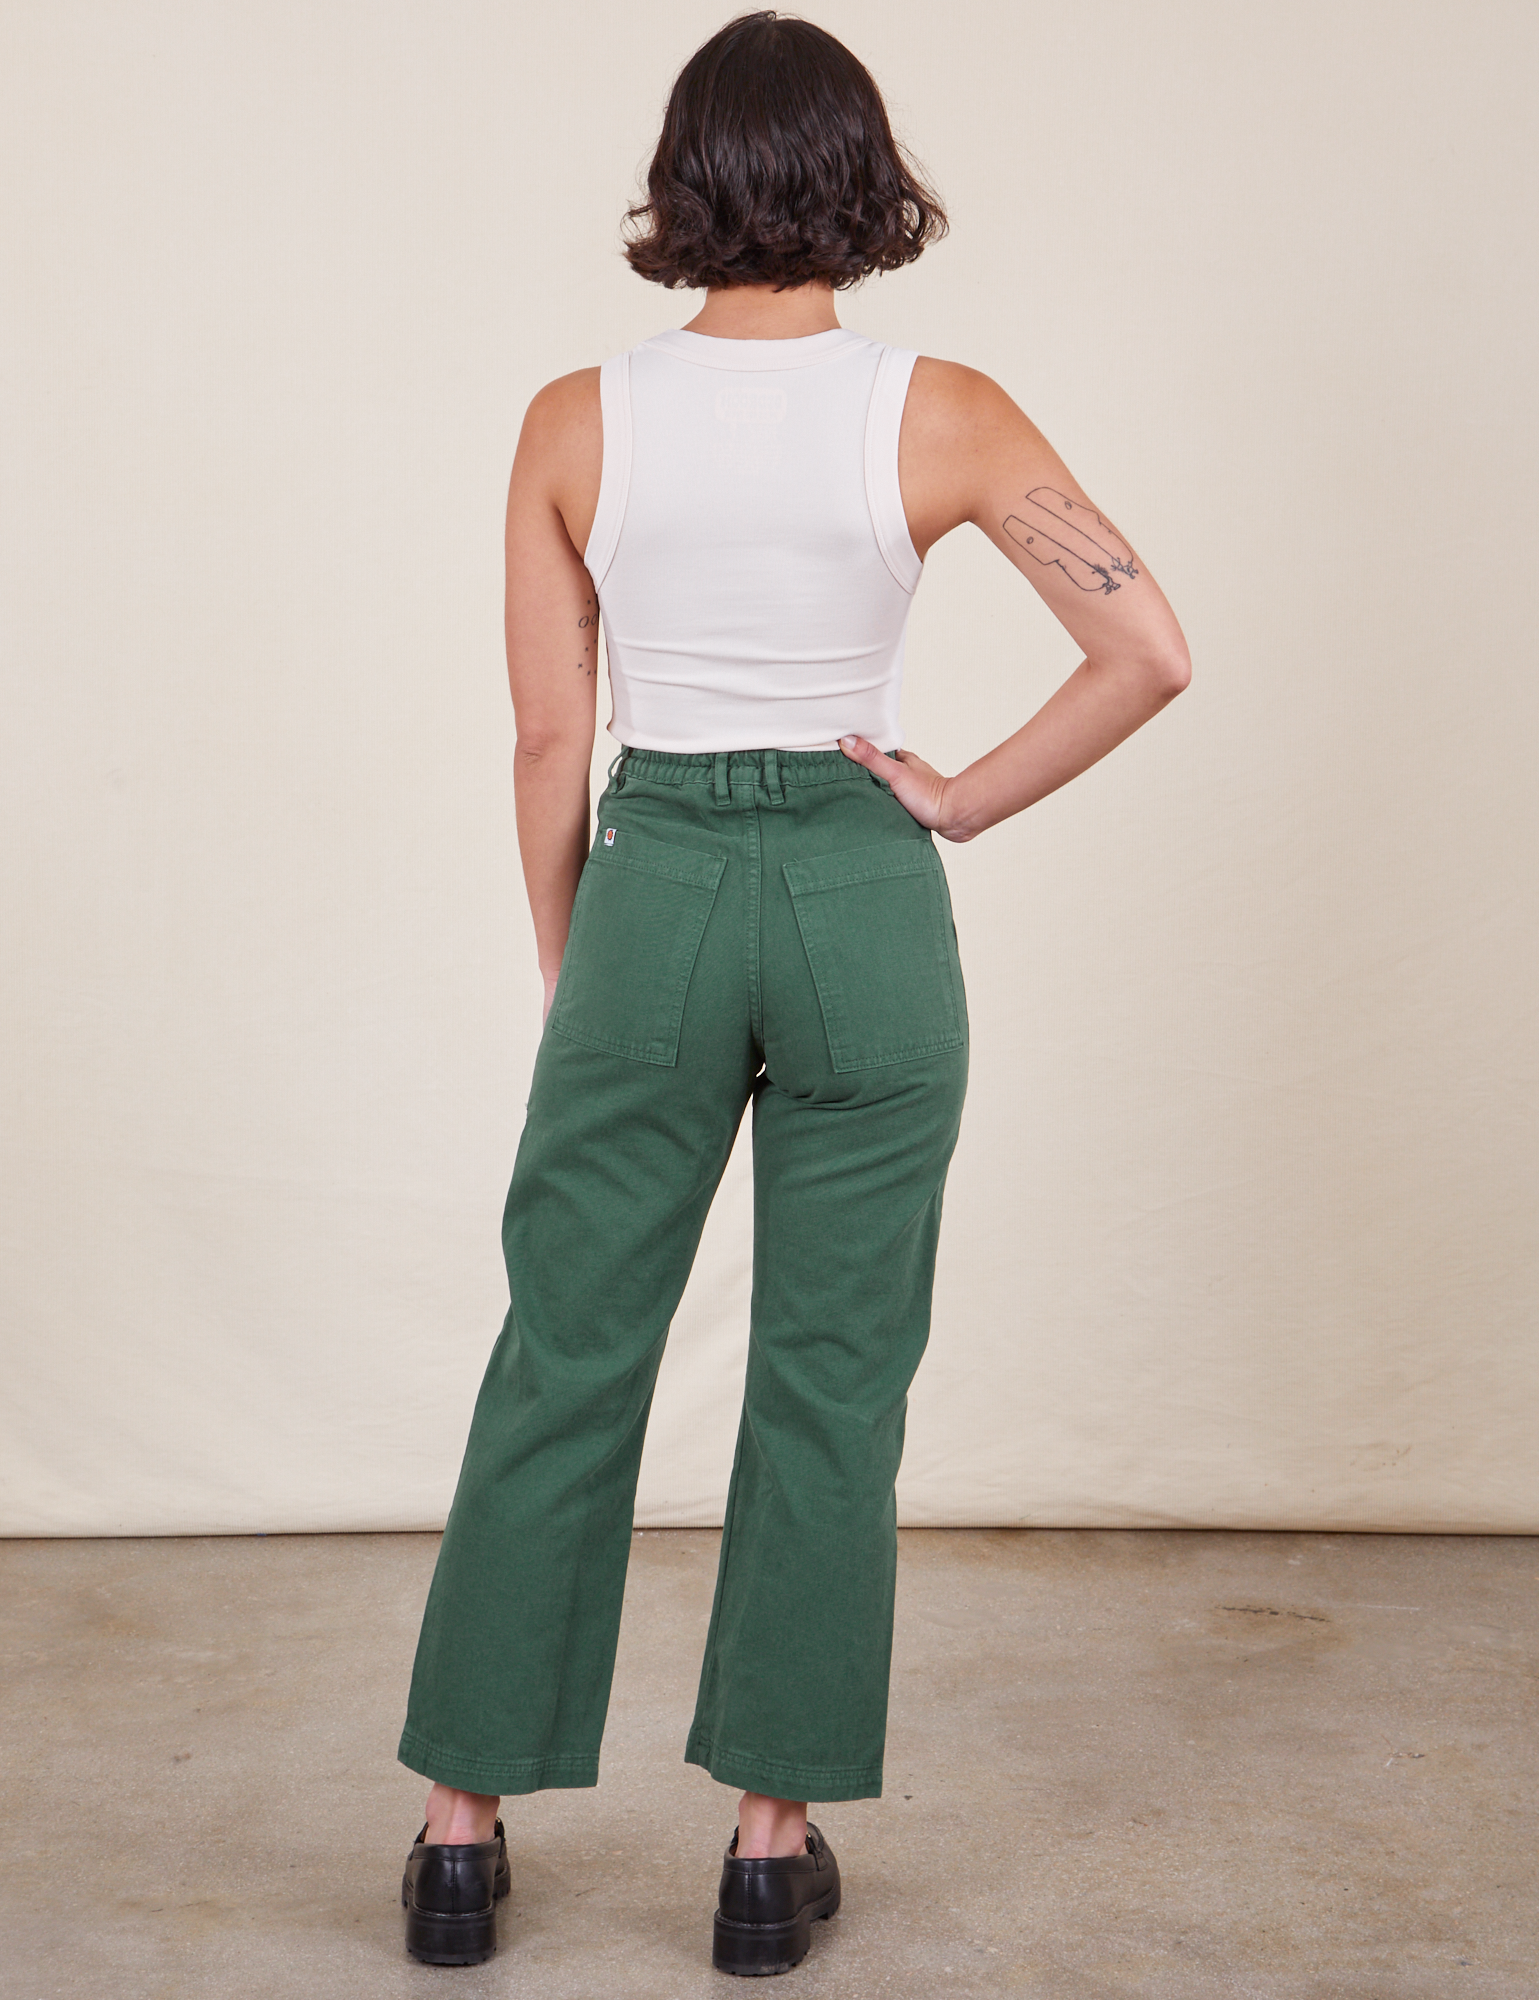 Work Pants in Dark Emerald Green back view on Soraya wearing vintage off-white Tank Top